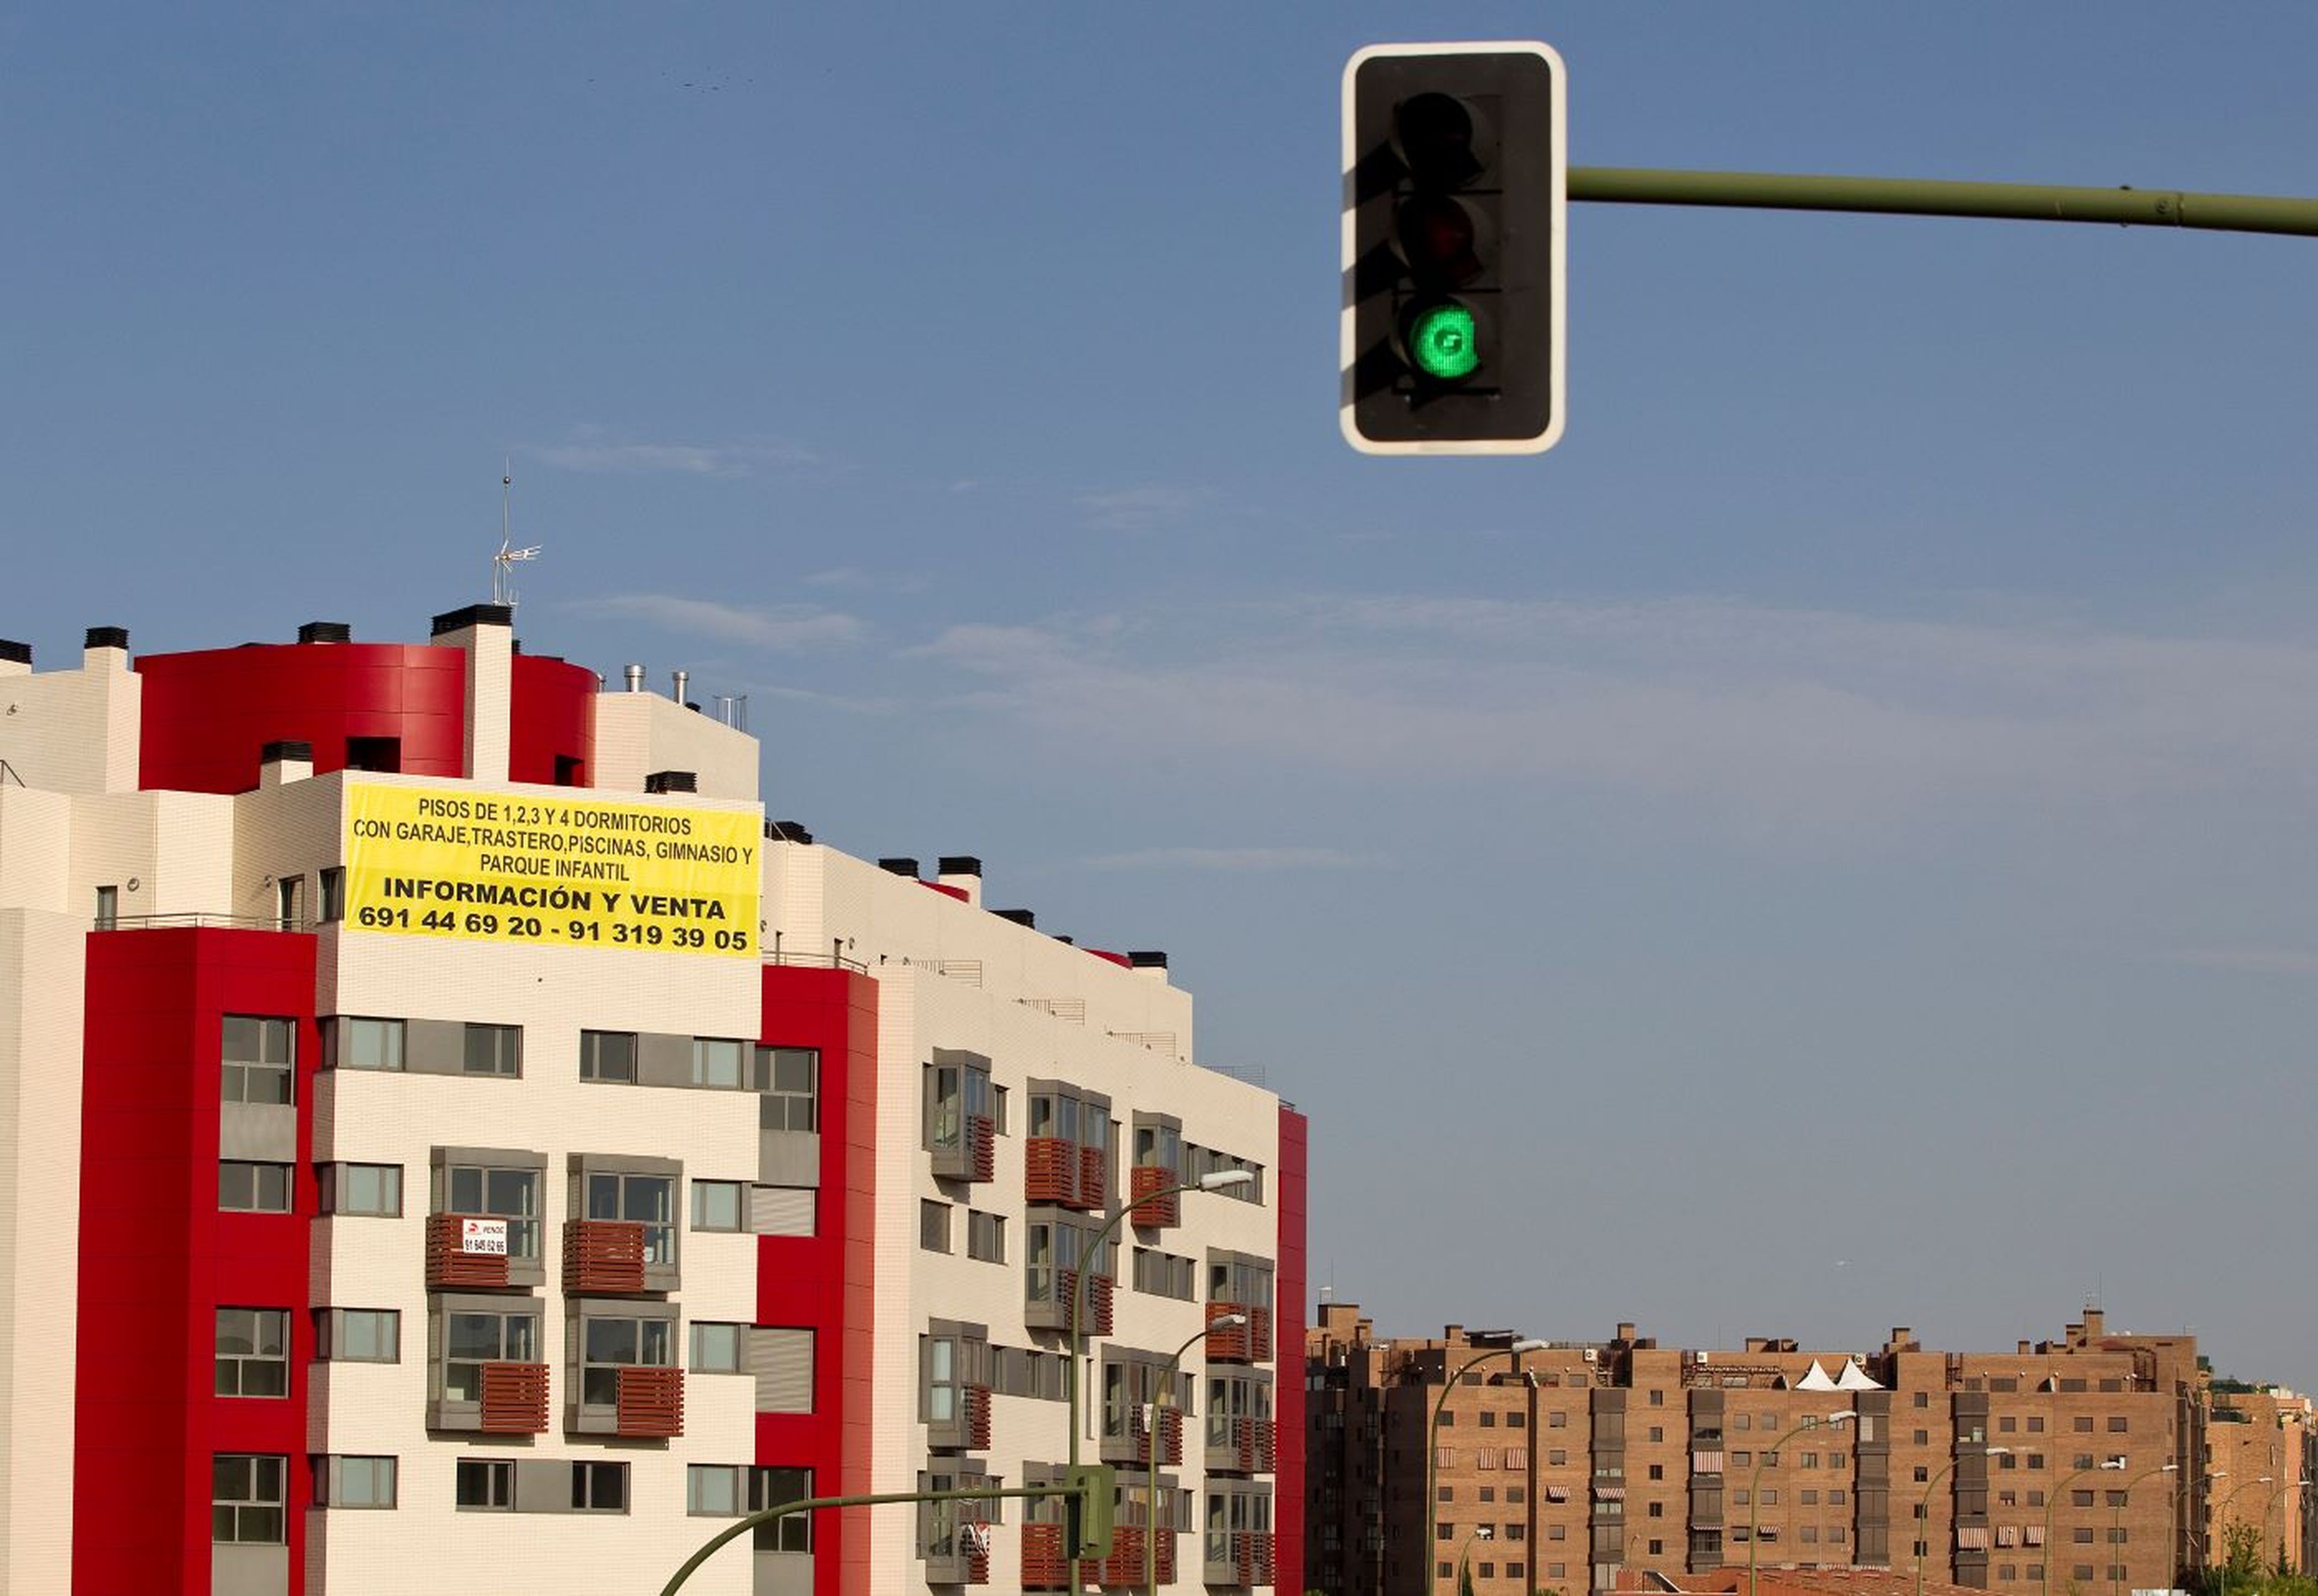 Casas, pisos en venta en España, semáforo verde